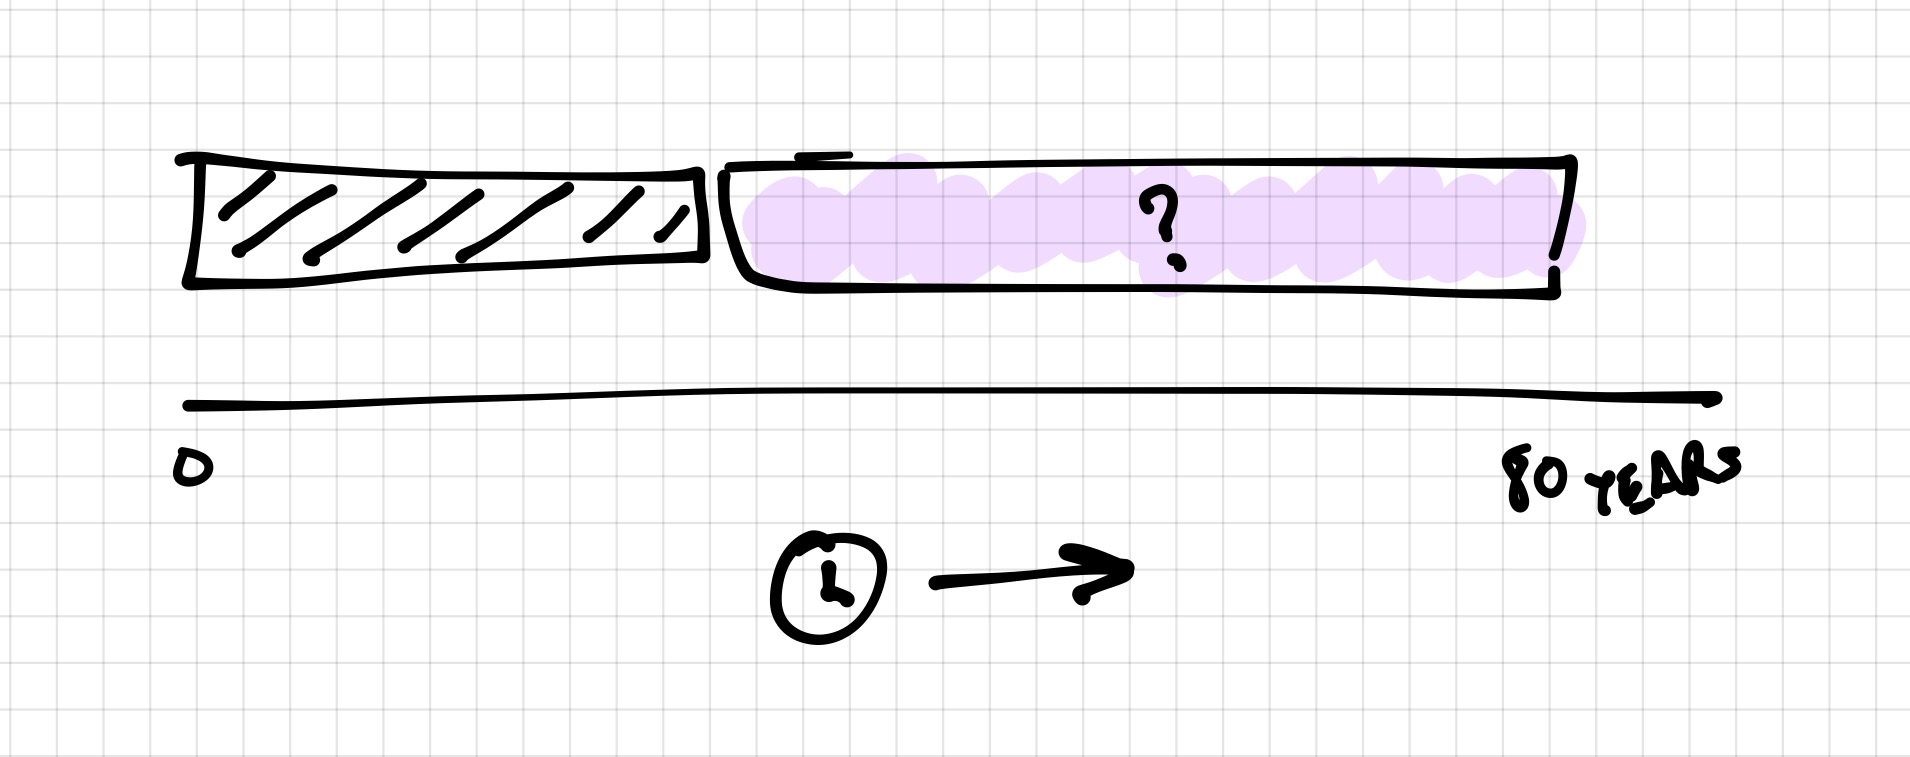 A horizontal bar chart sketch